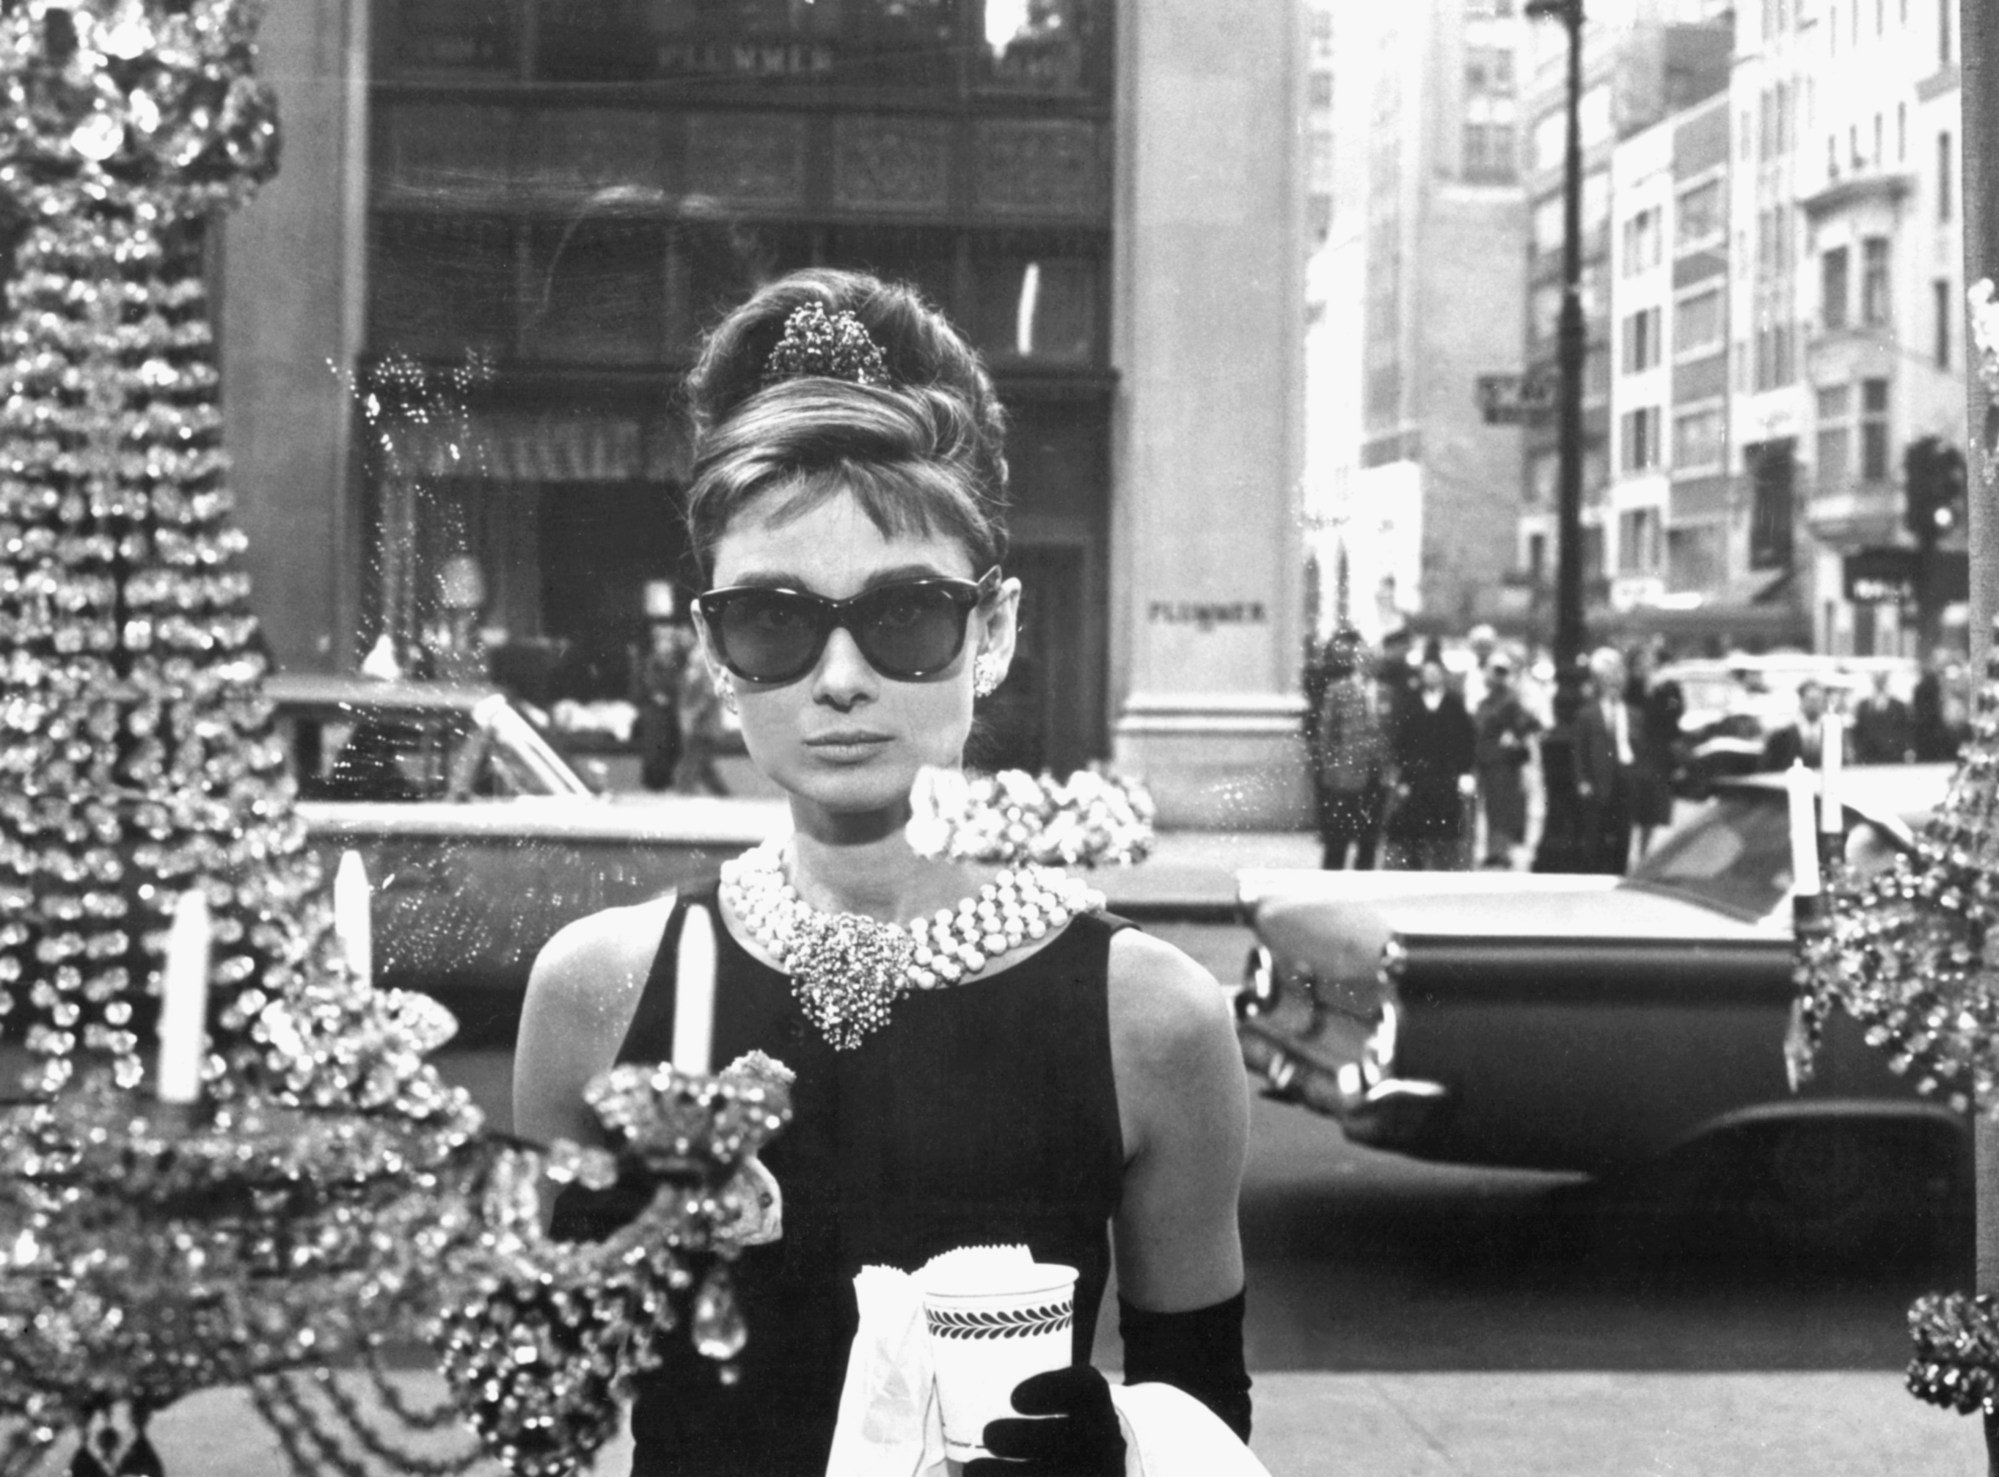 Louis Vuitton Audrey HepBurn Picture. Audrey Hepburn Louis Vuitton